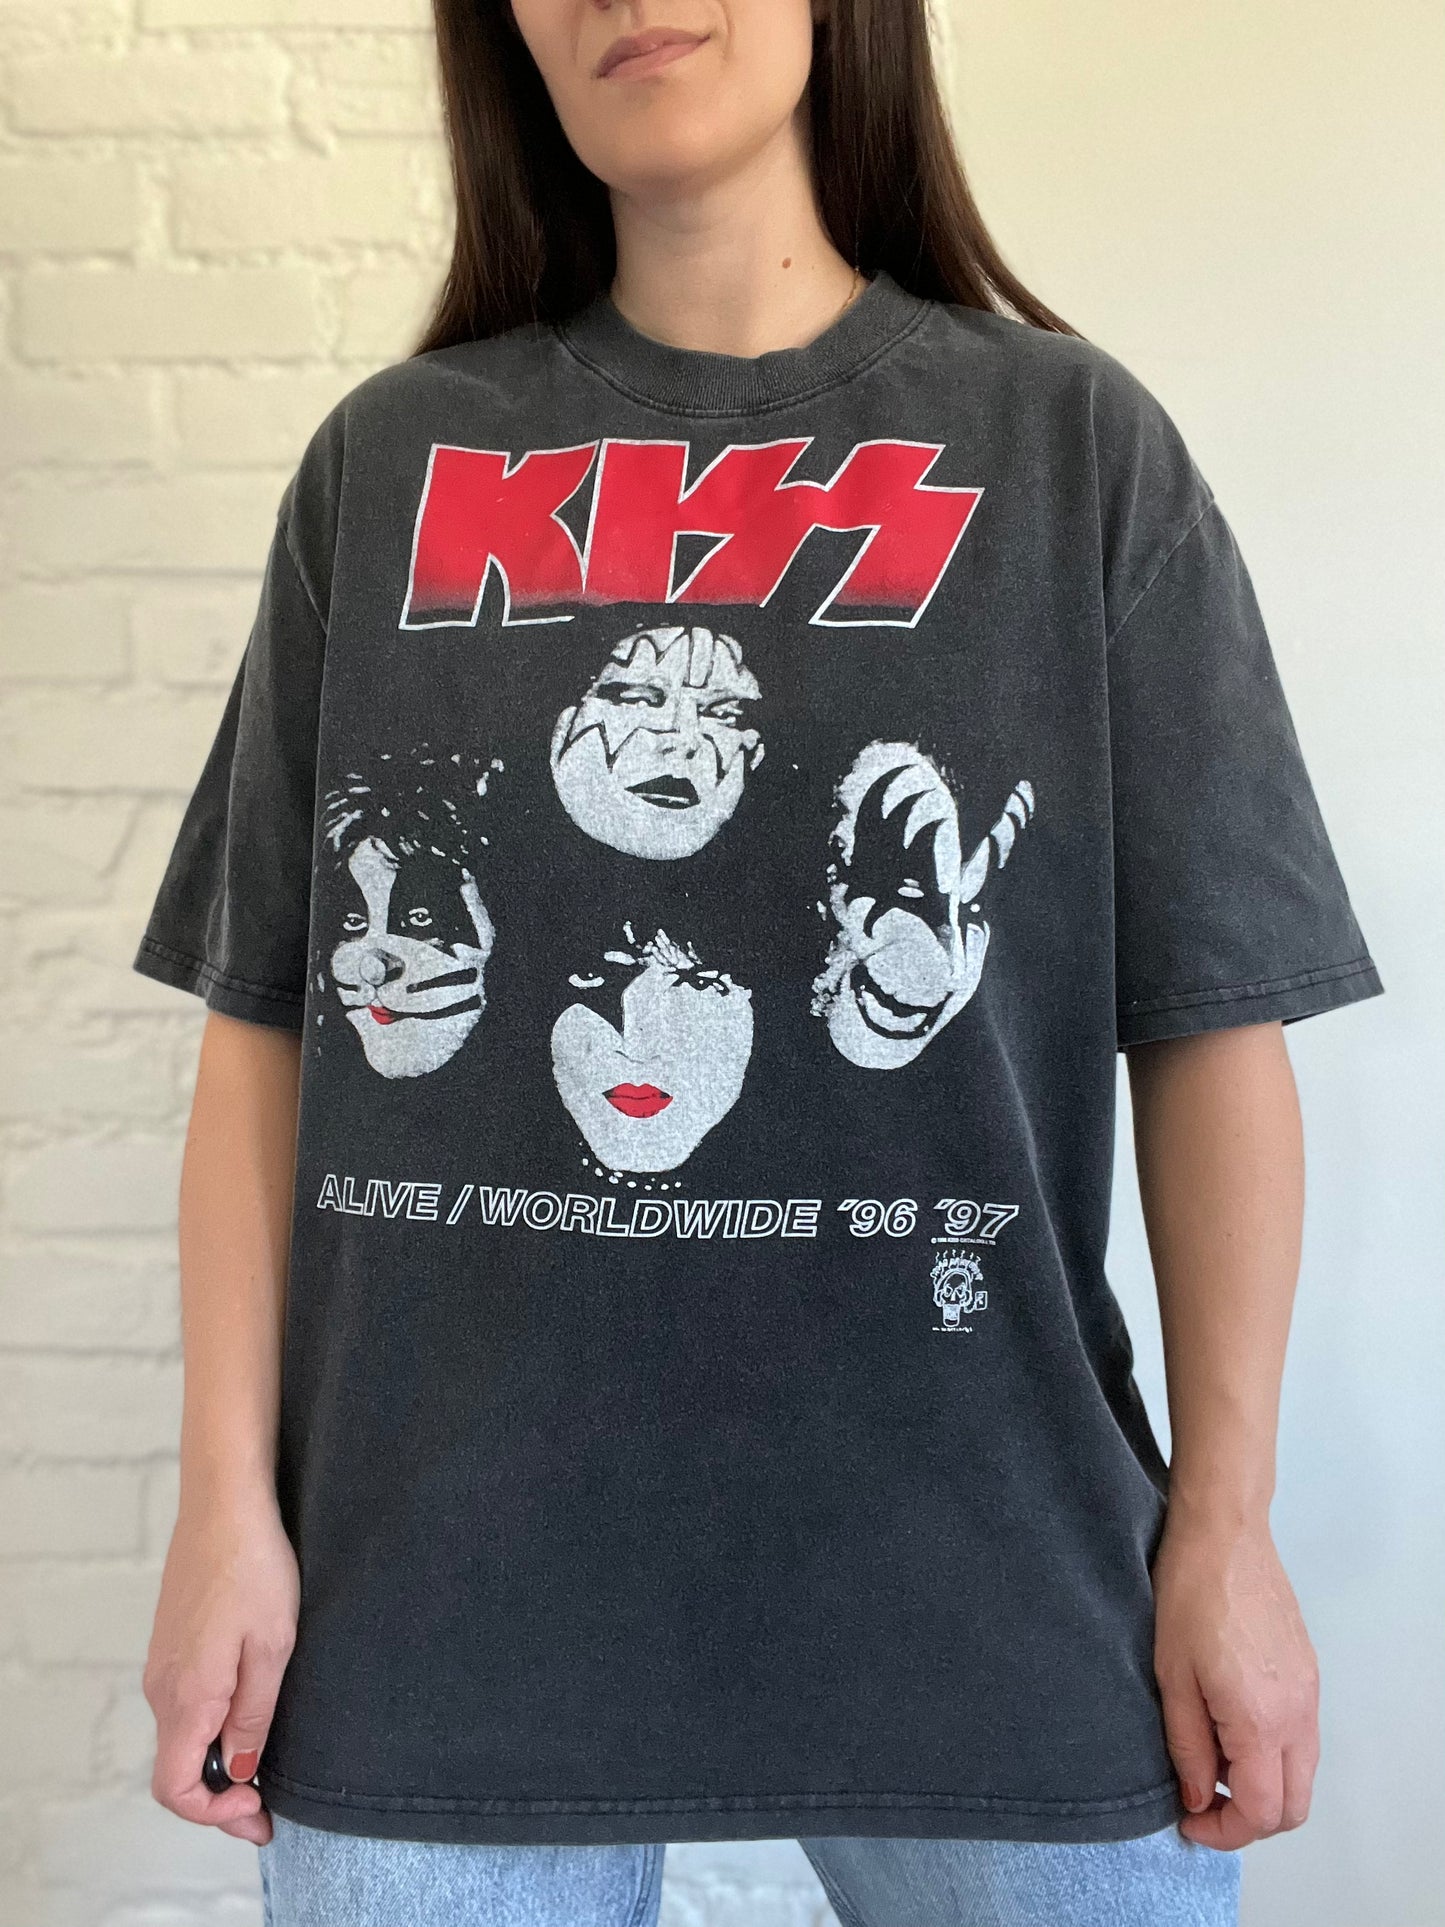 KISS】ALIVE/WORLDWIDE'96'97ツアーTシャツ - トップス